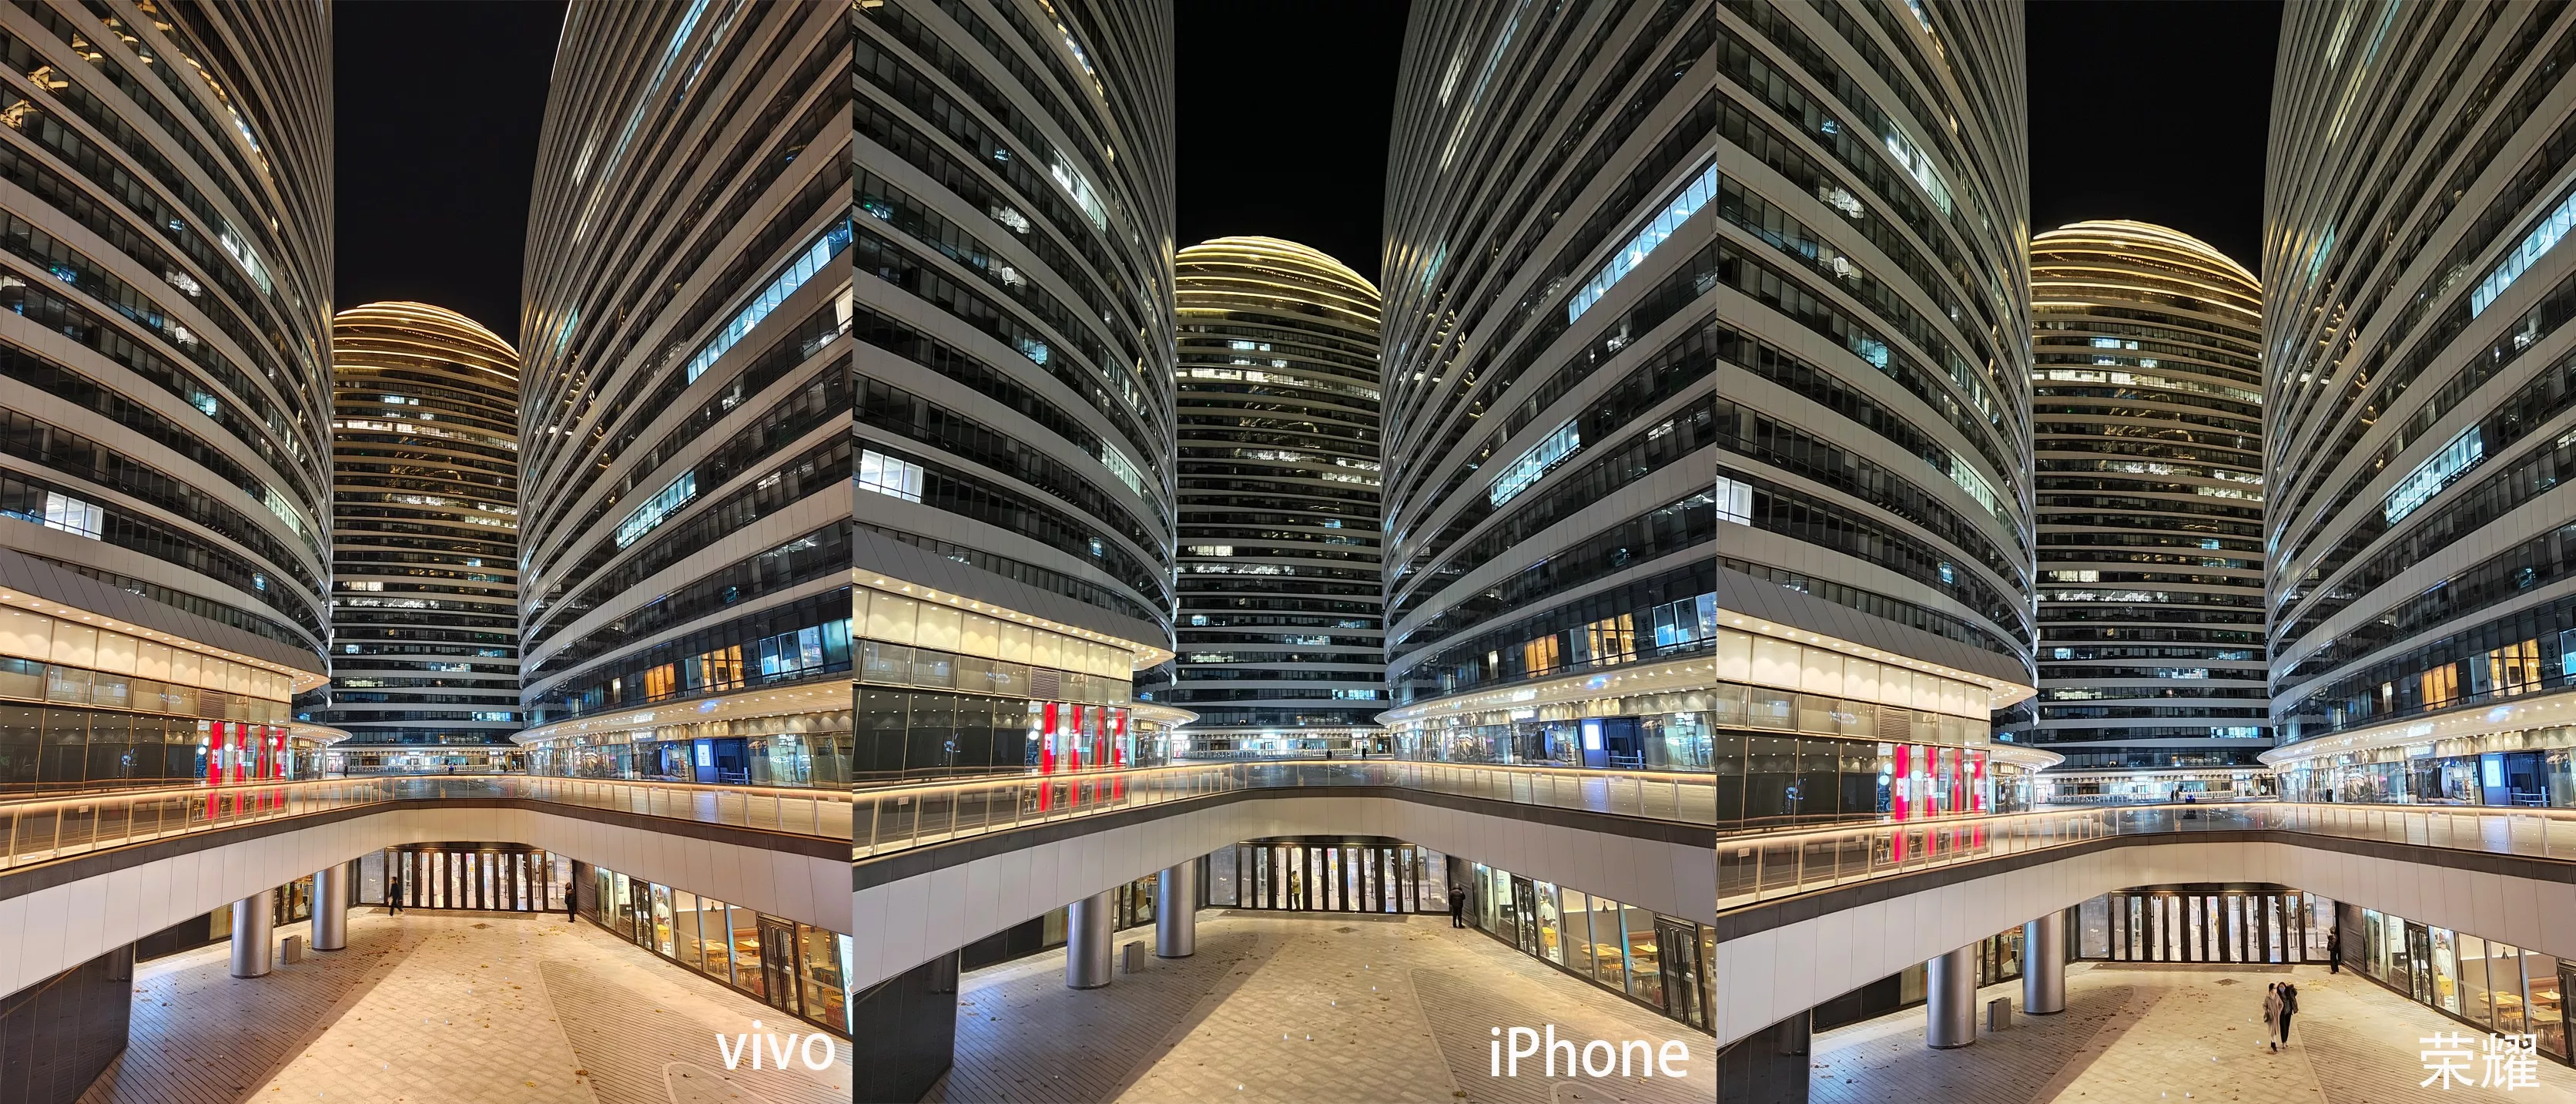 vivo/HONOR/iPhone 夜景影像對比實測